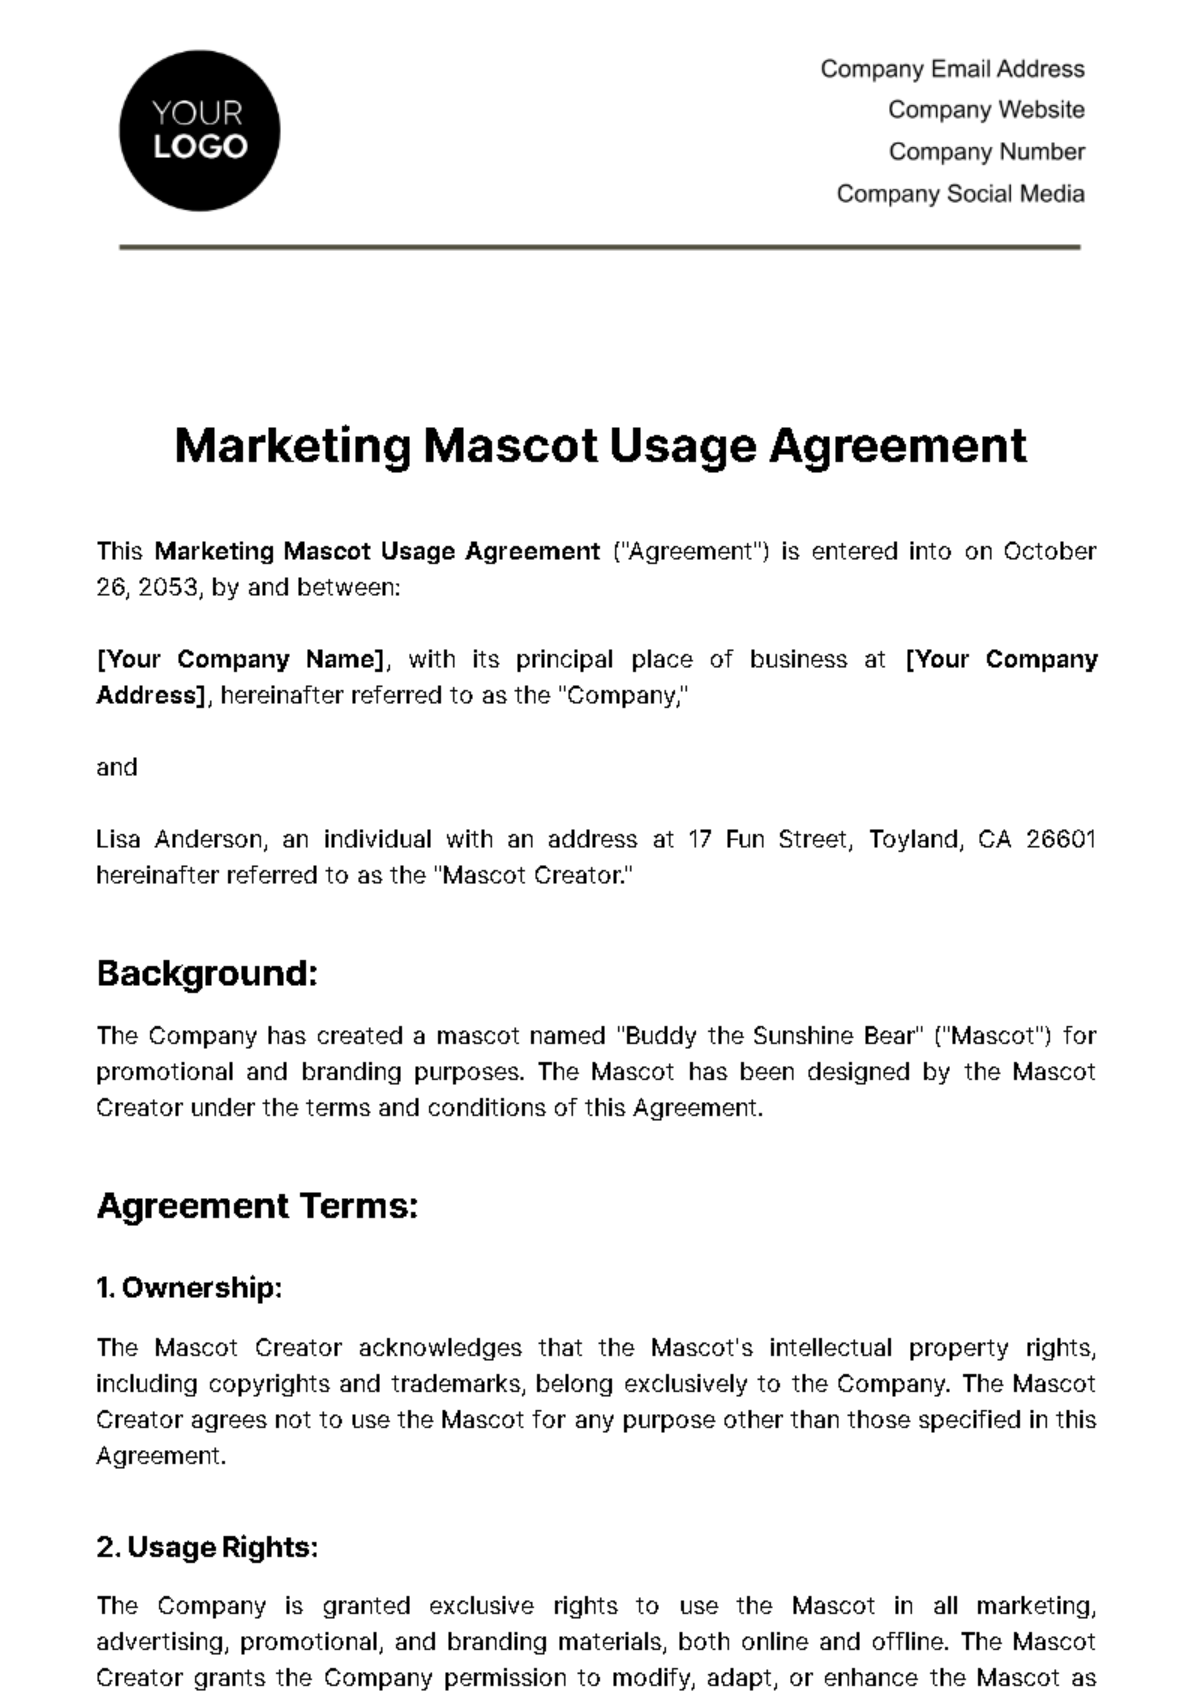 Marketing Mascot Usage Agreement Template